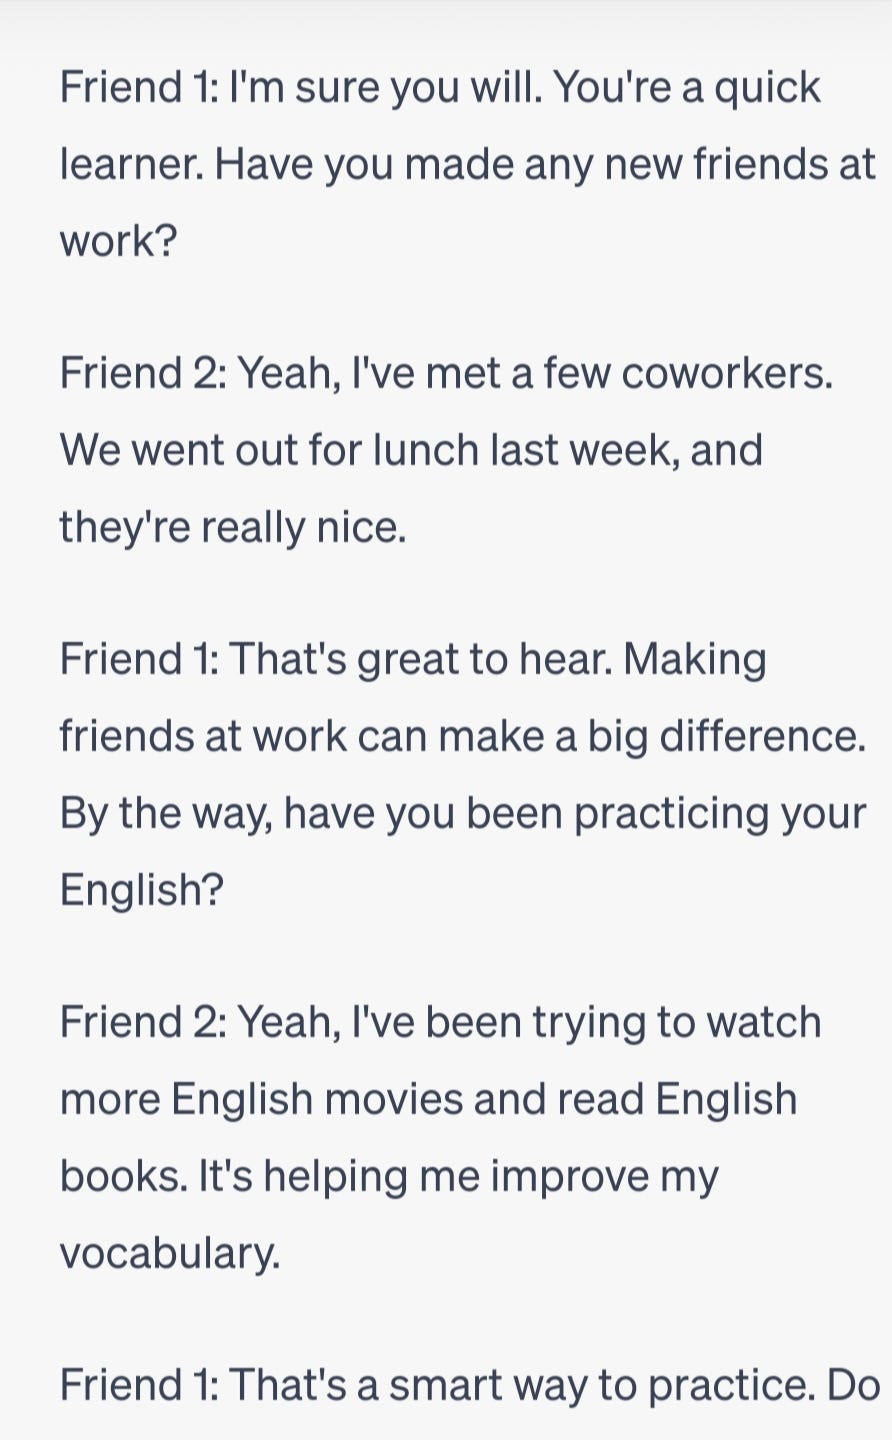 Great! English Conversation